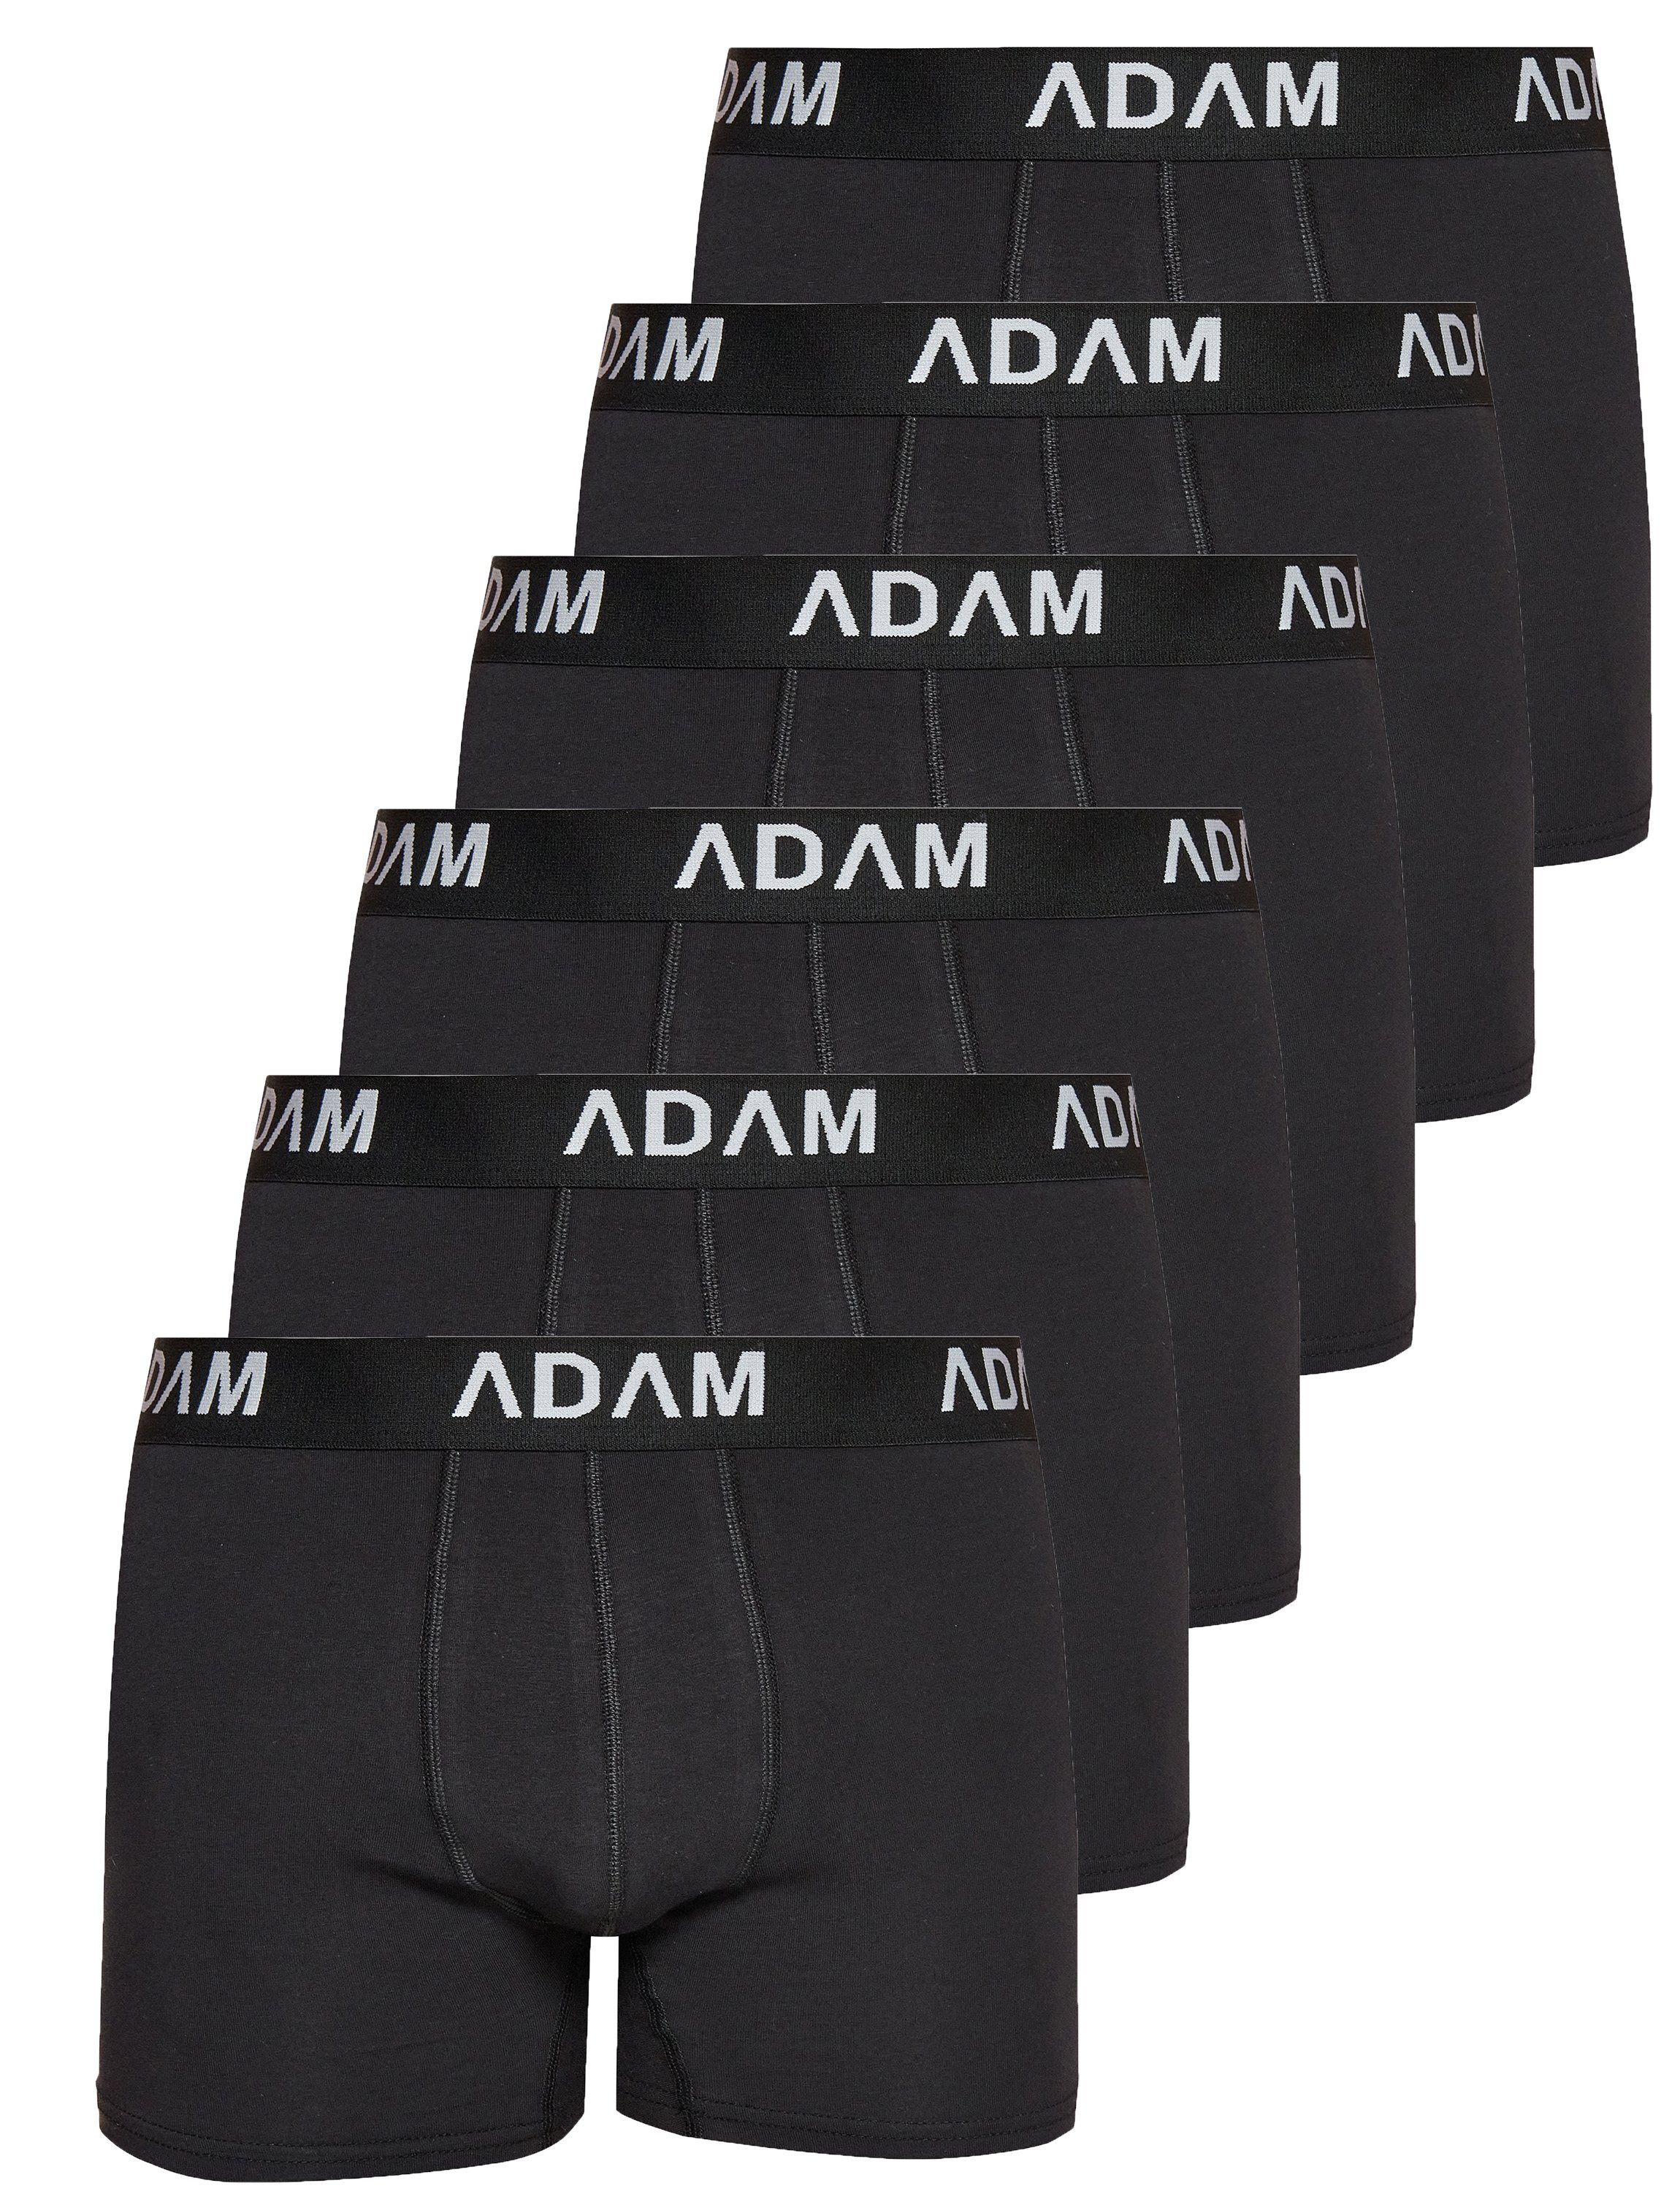 ADAM JEANS Boxershorts Boxer-1 (6-St., 6er Set, 8er Set, 10er Set, 12er Set) Boxershorts Herren Boxer Shorts Männer Unterhosen Trunks Underwear 6er Set Box-A